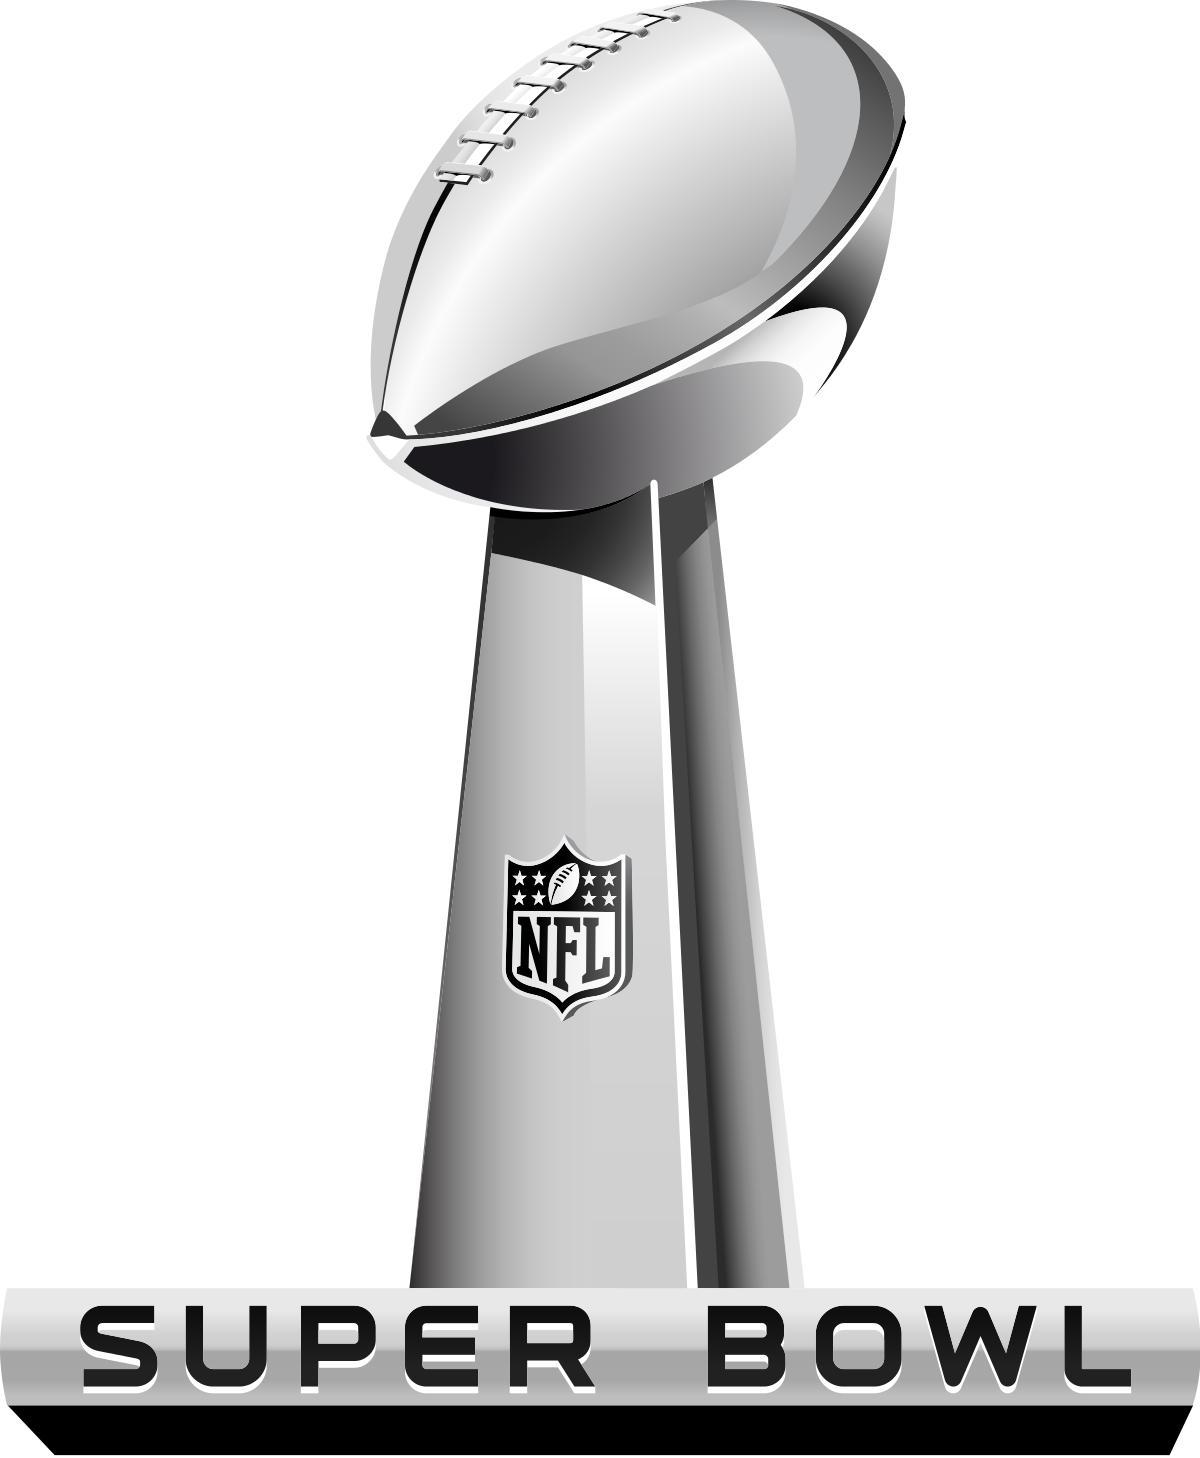 Super Bowl, International Broadcasts Wiki